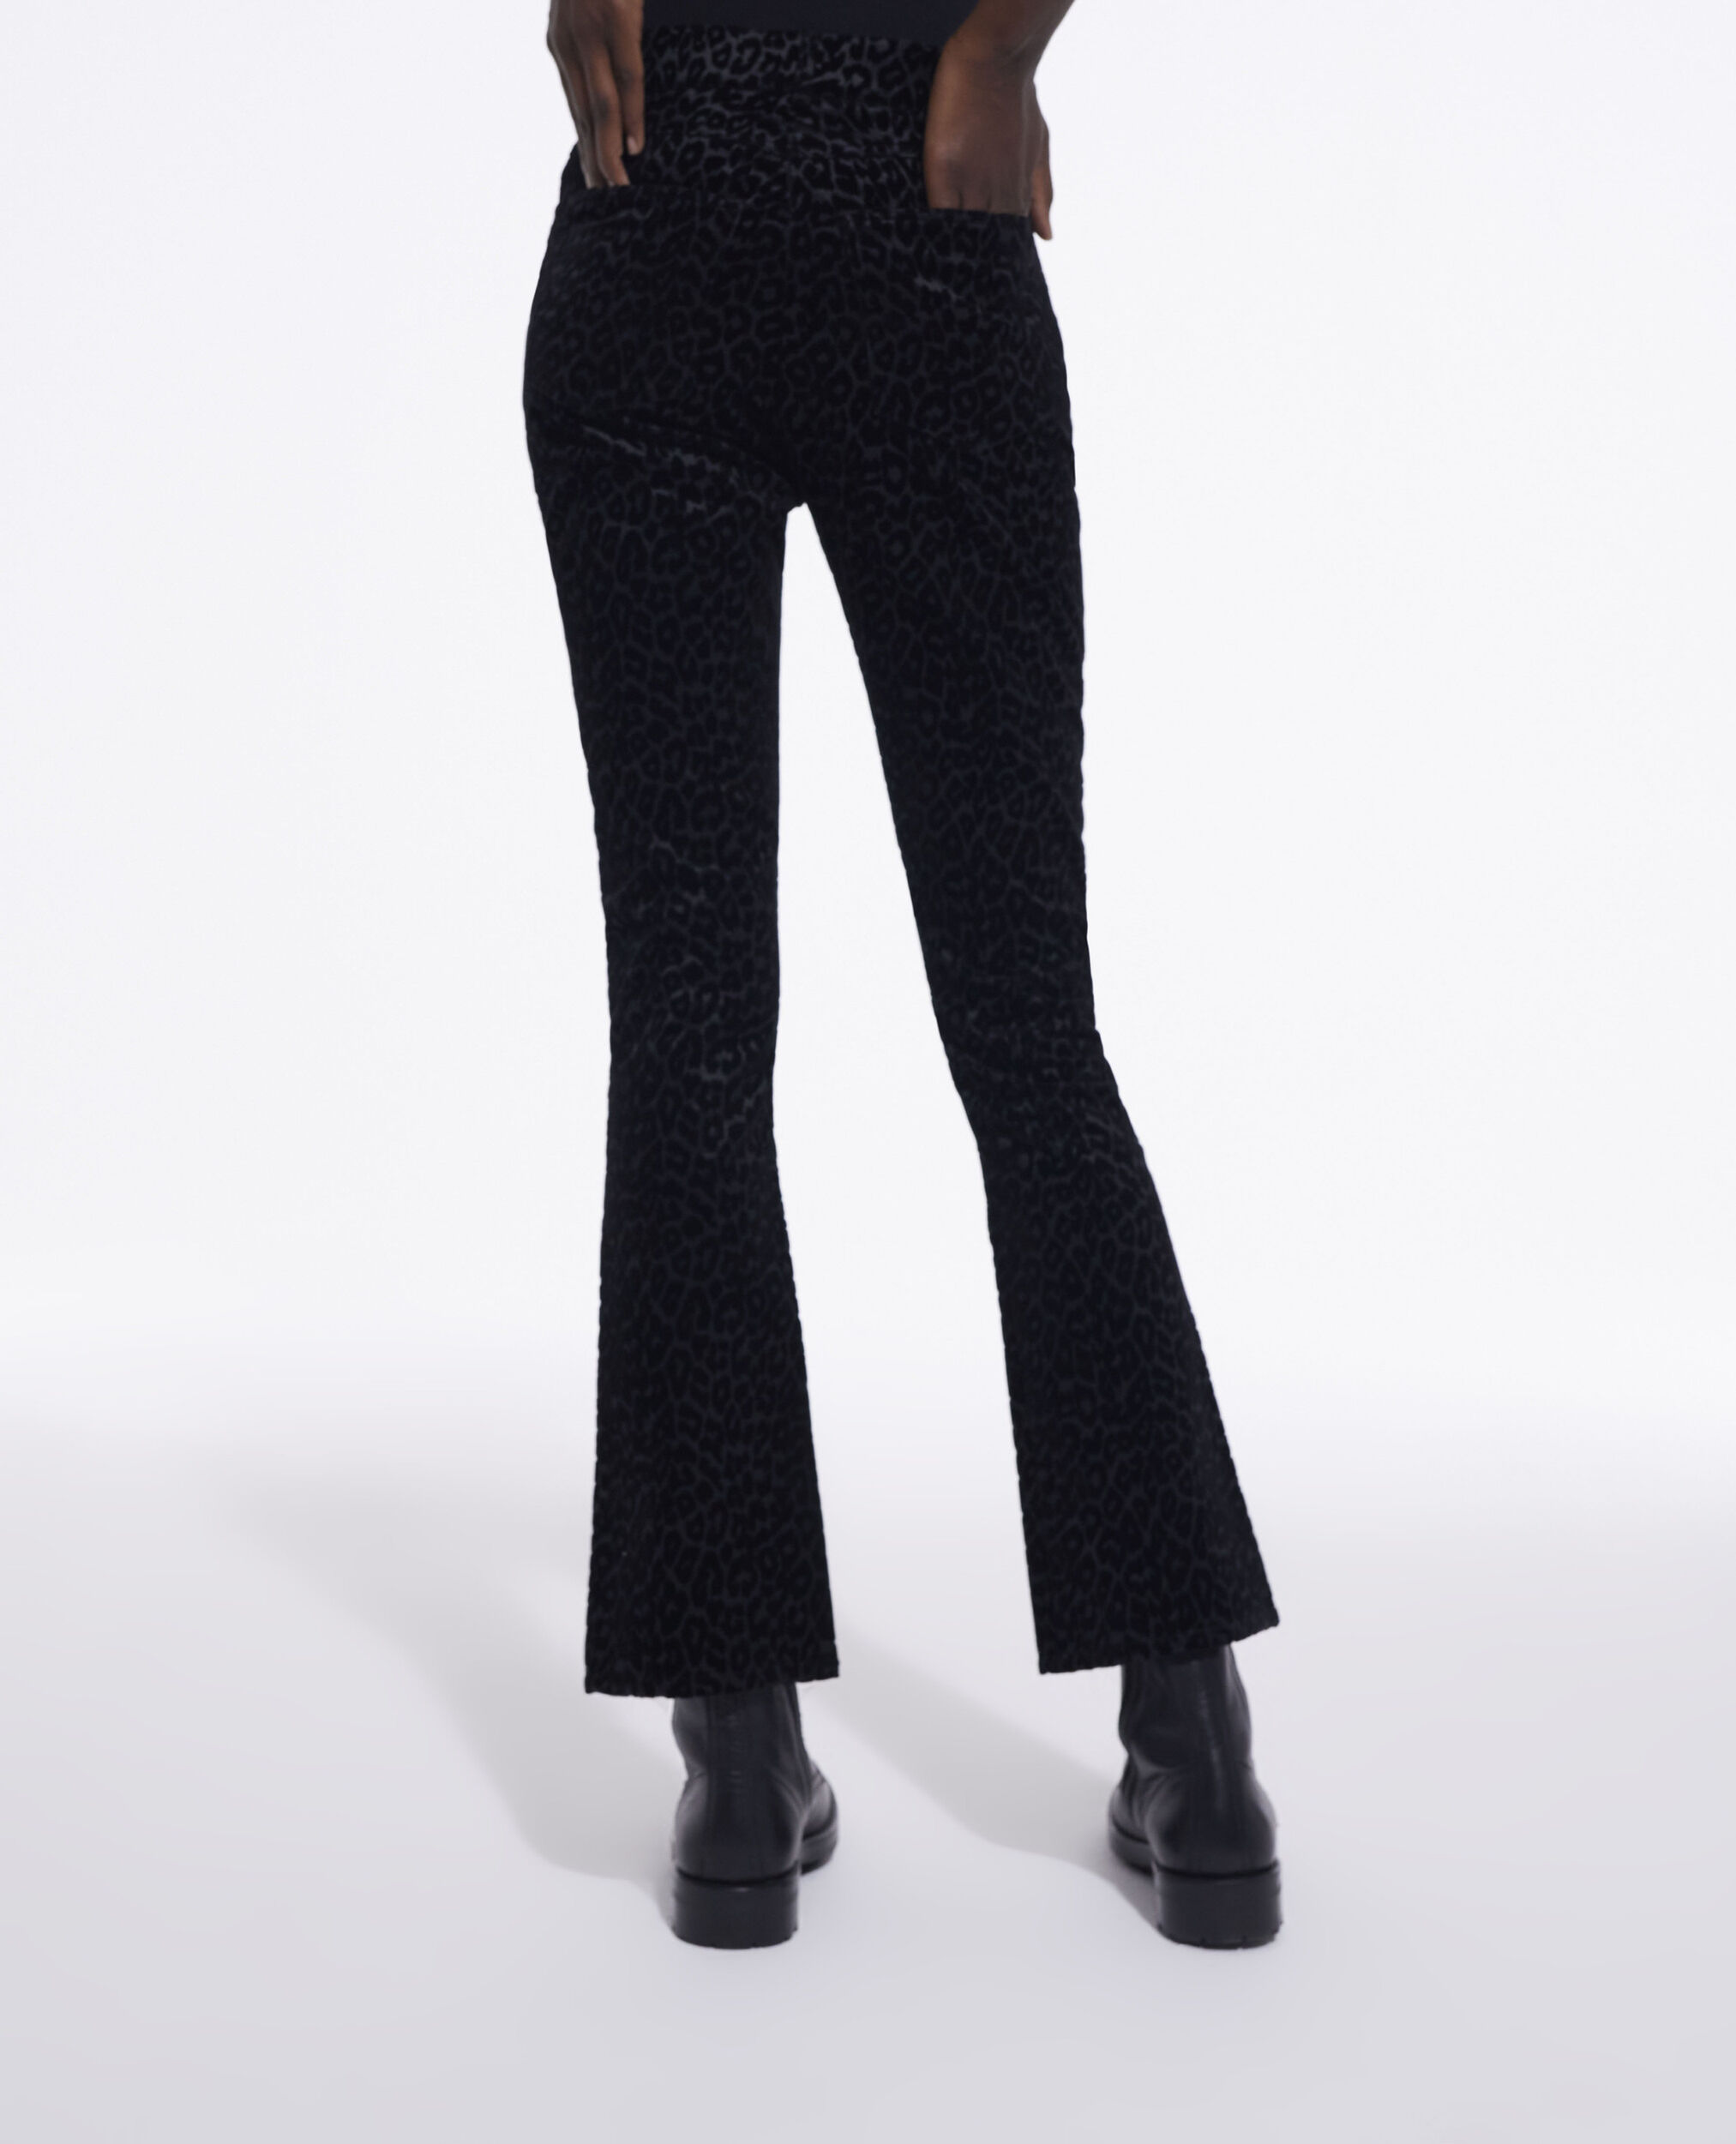 Black velvet suit pants with leopard print, BLACK, hi-res image number null